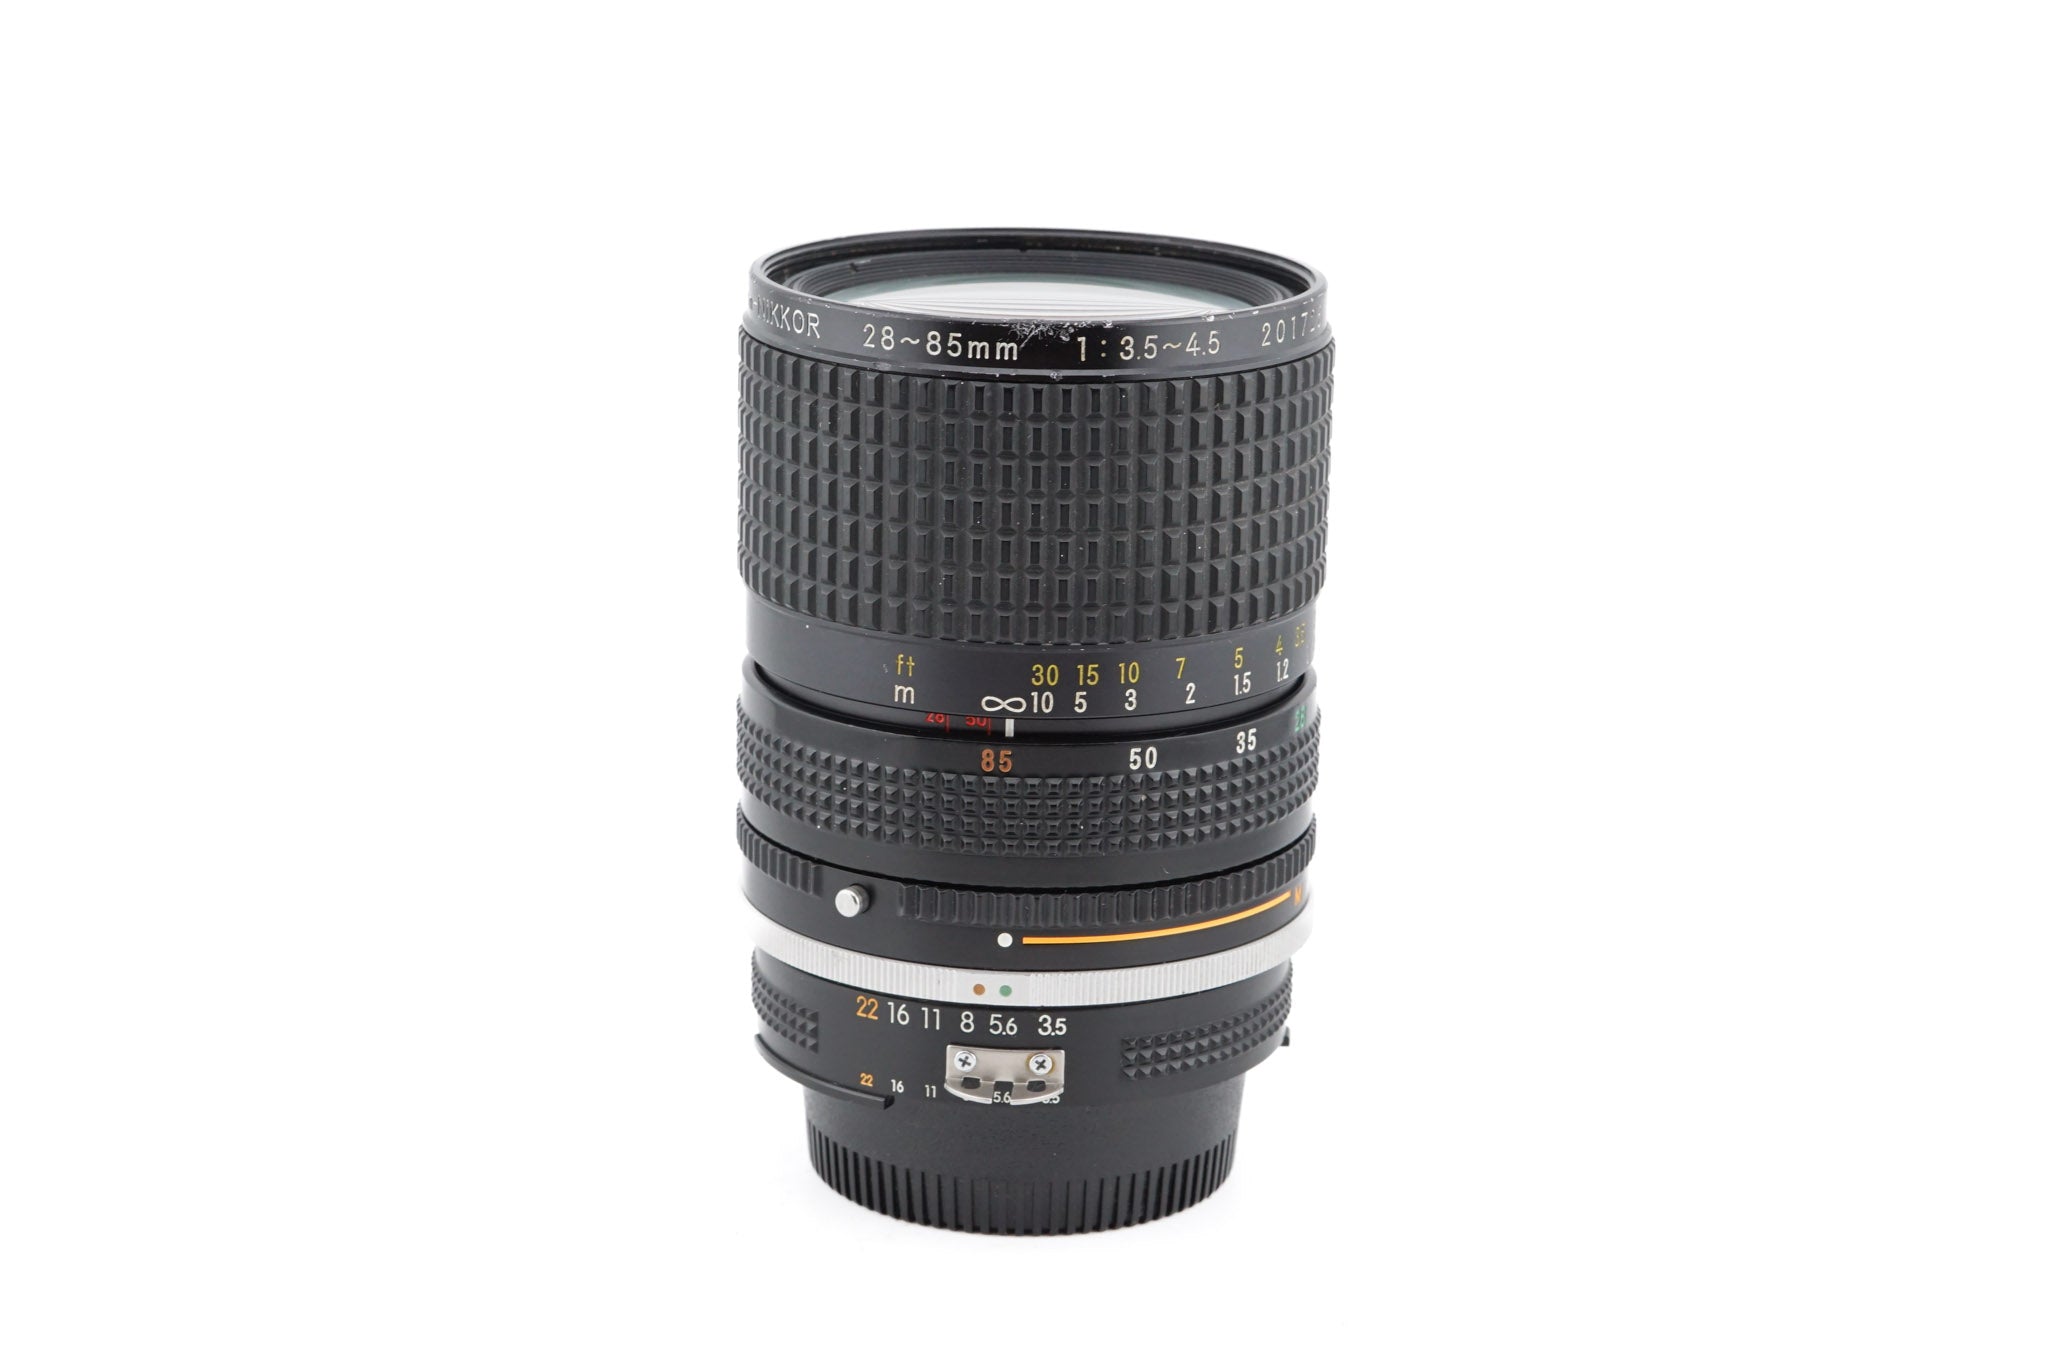 Nikon ZOOM NIKKOR 28-85mm1:3.5-4.5 AI-S - レンズ(ズーム)